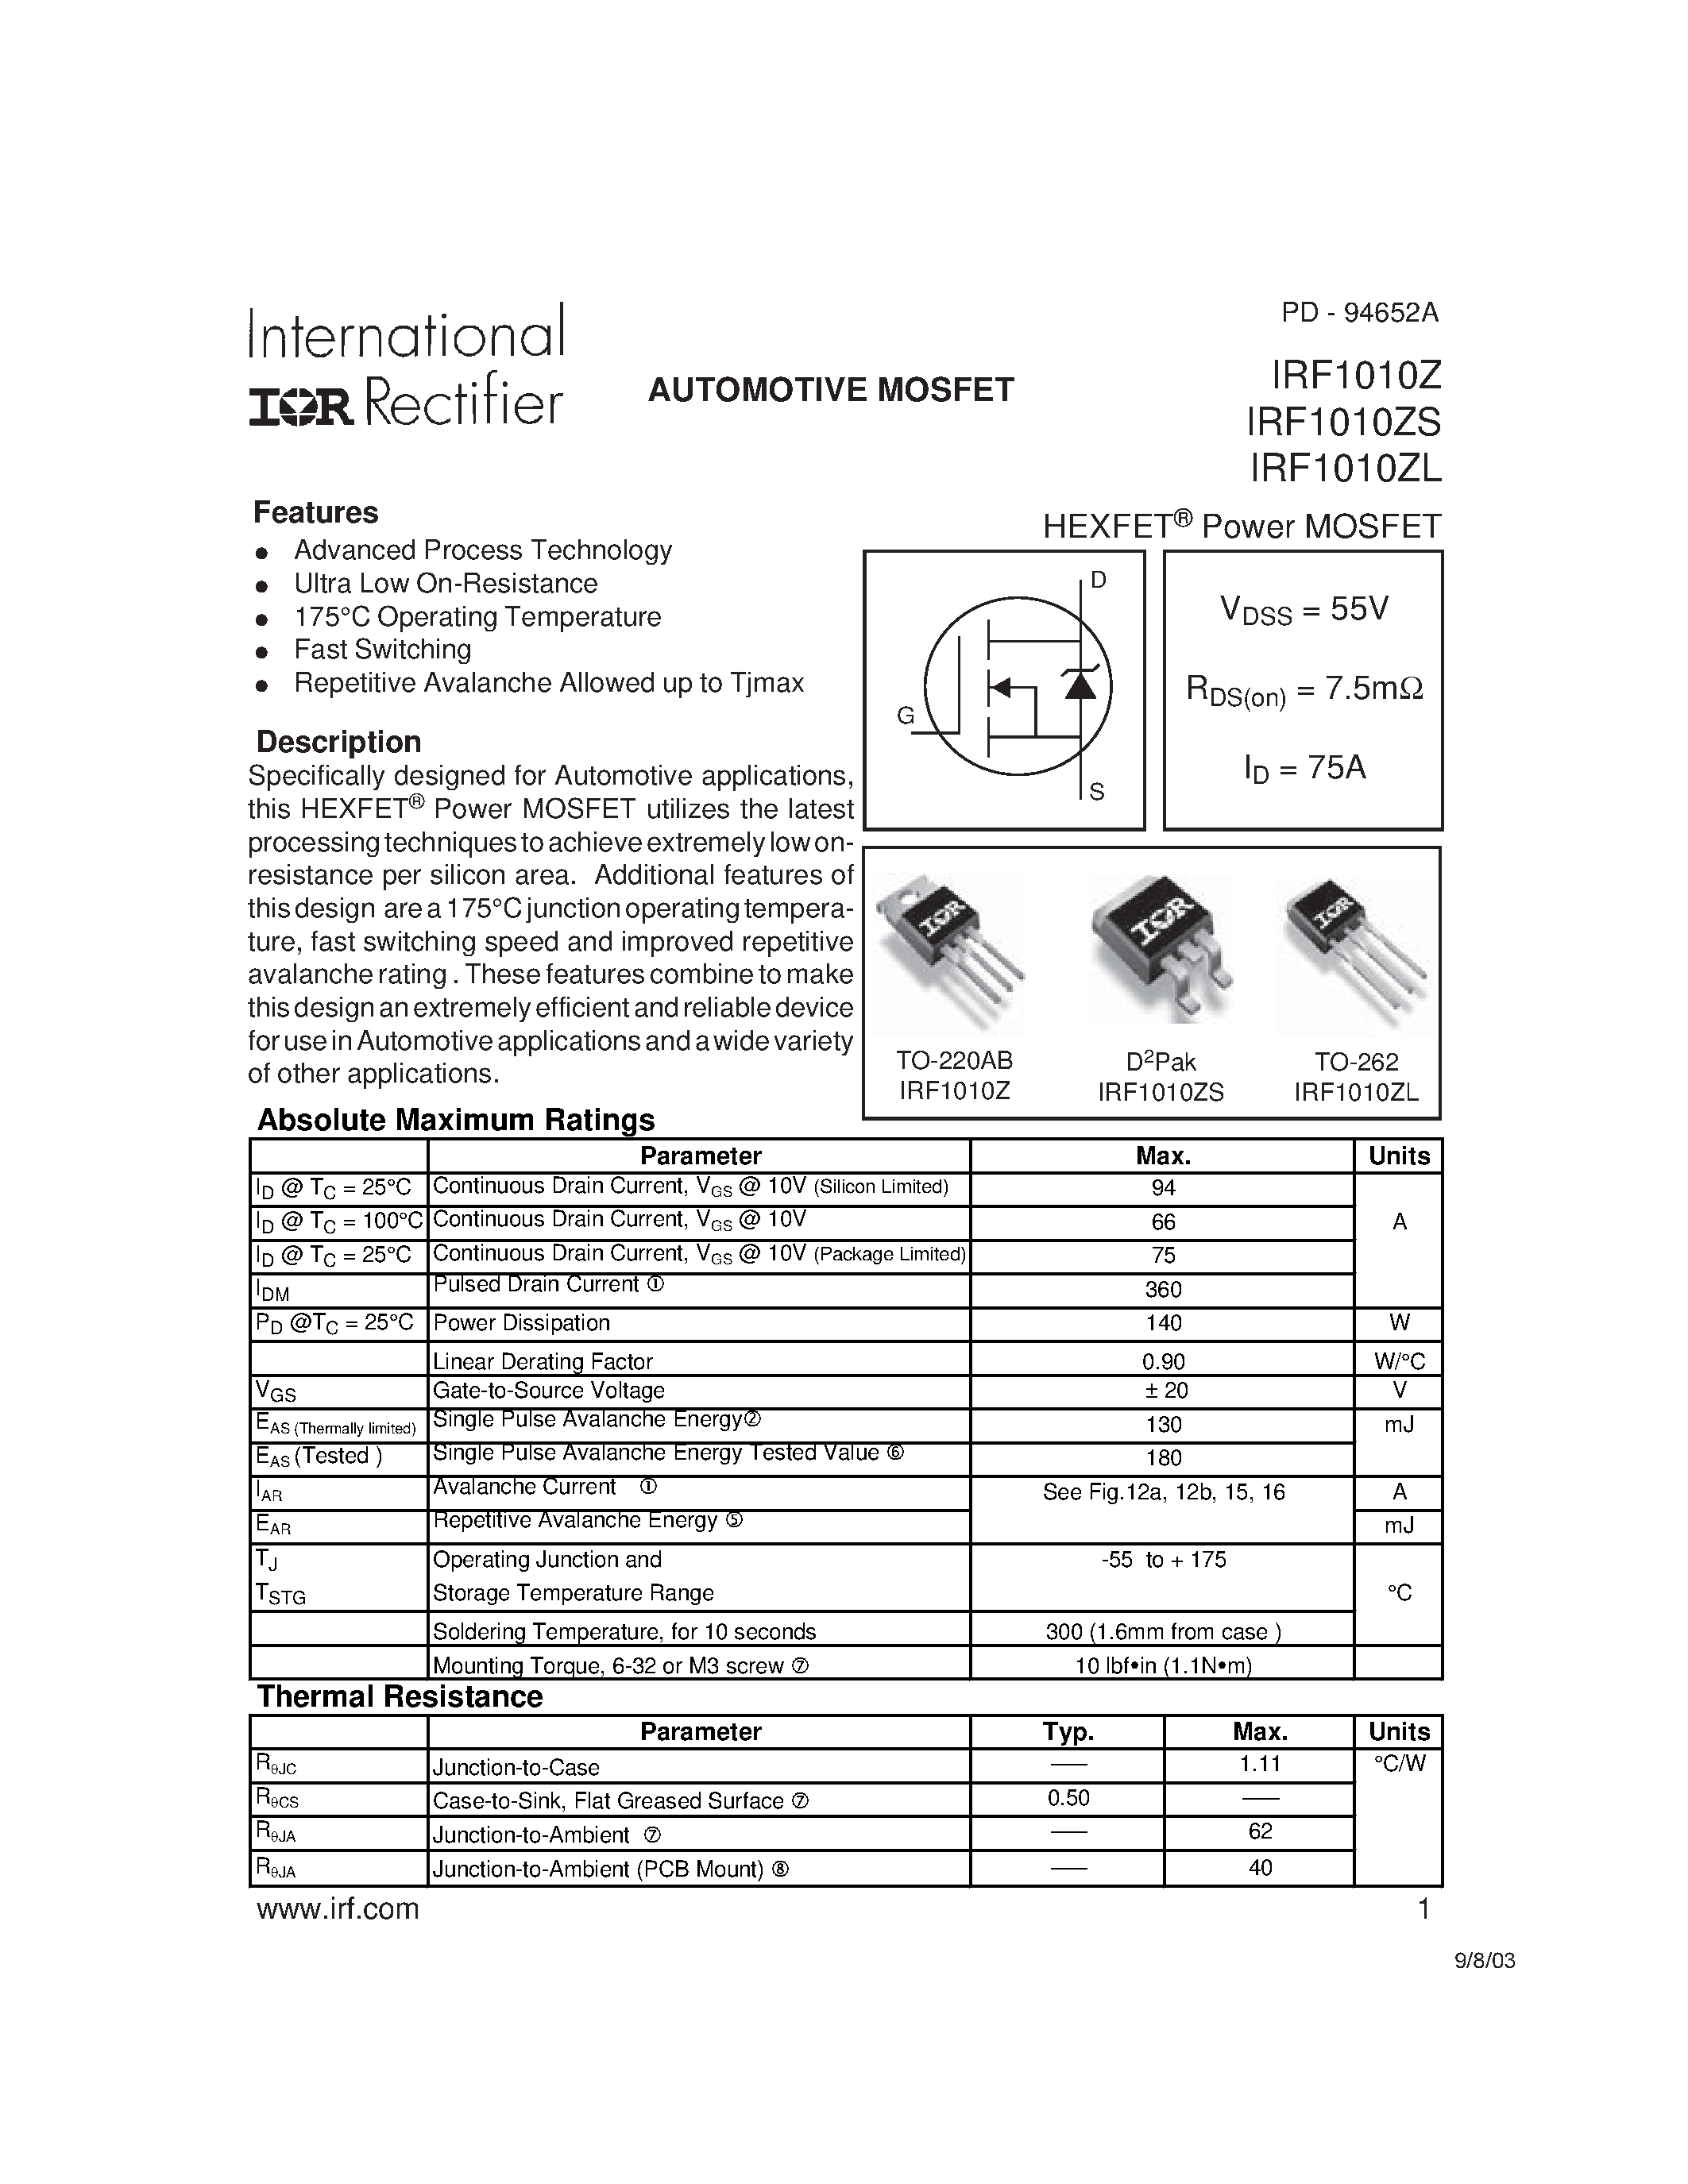 Datasheet IRF1010ZL - AUTOMOTIVE MOSFET page 1